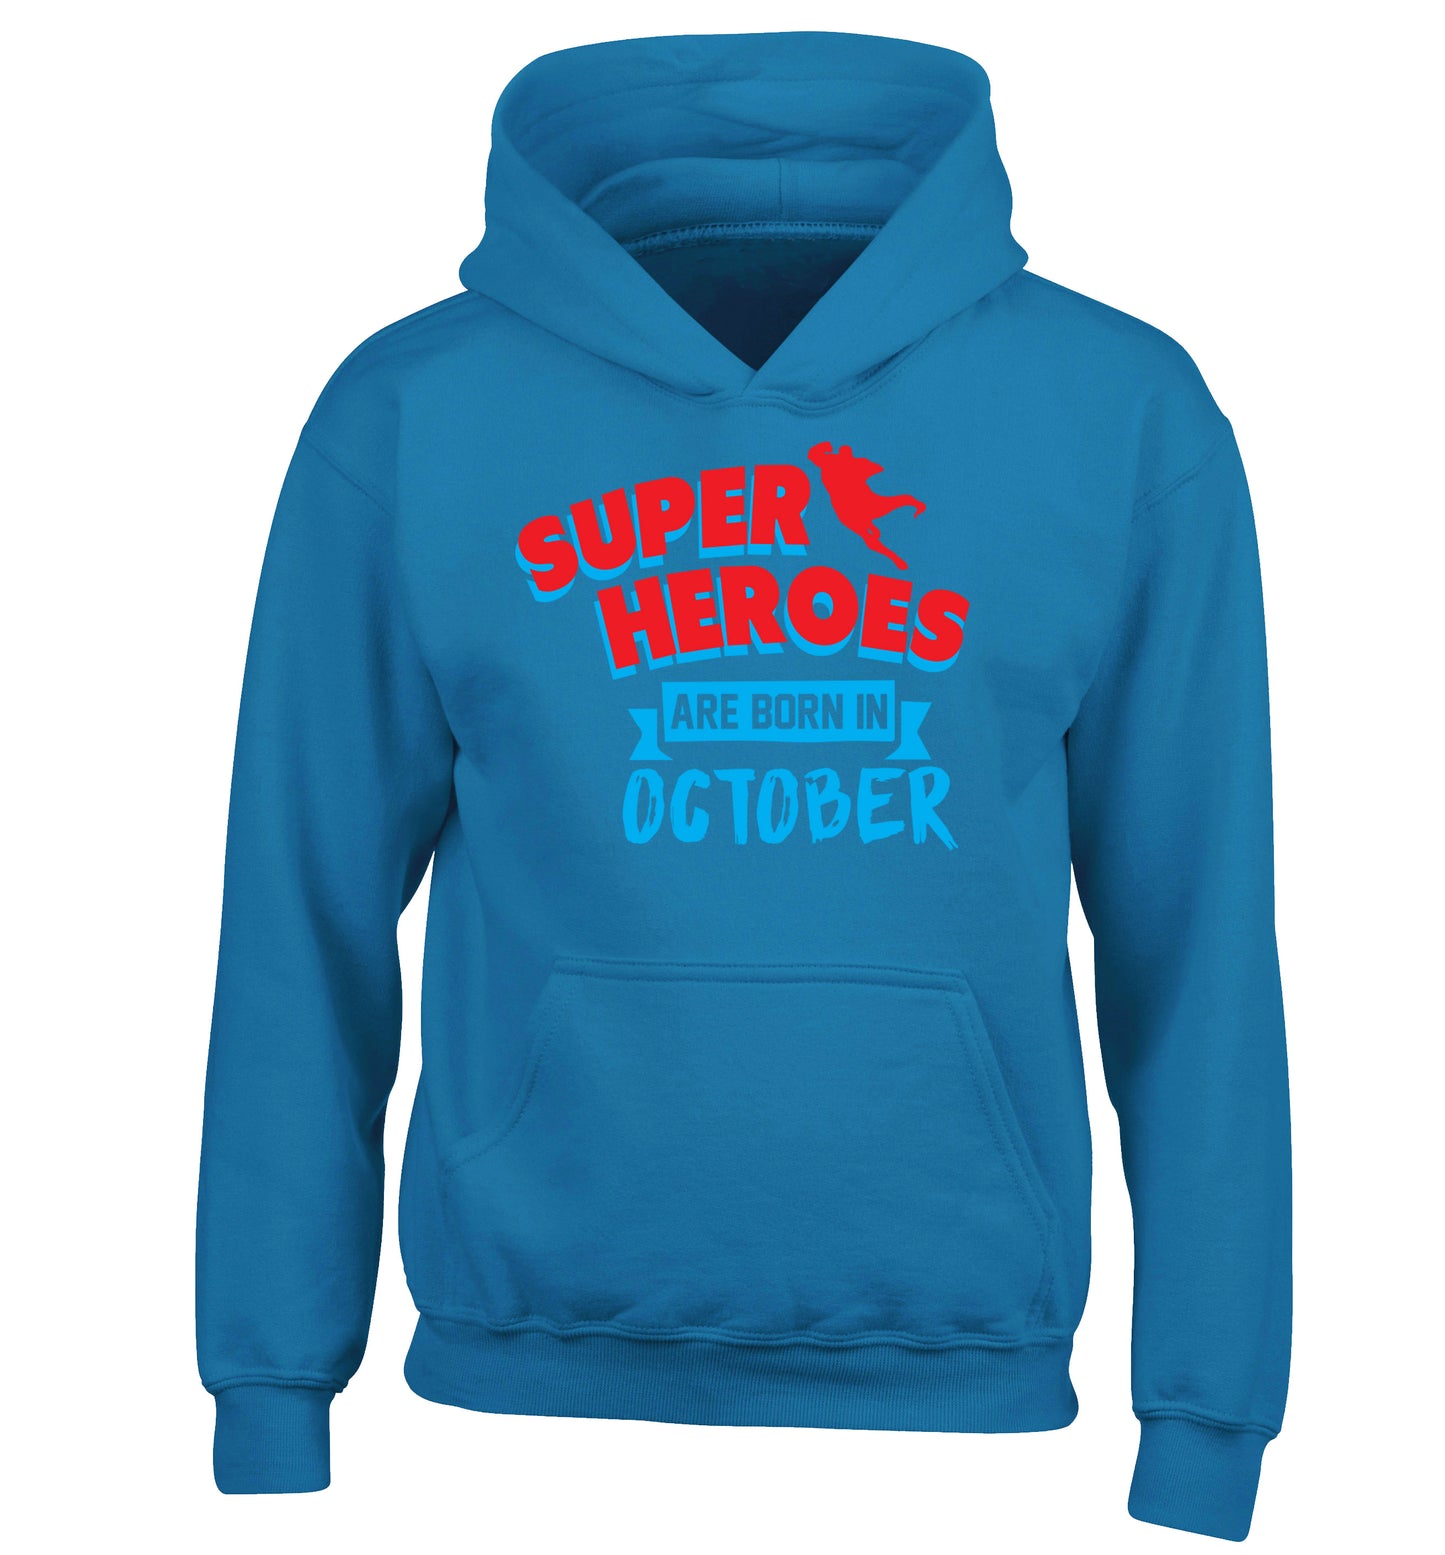 Superheroes are born in October children's blue hoodie 12-13 Years